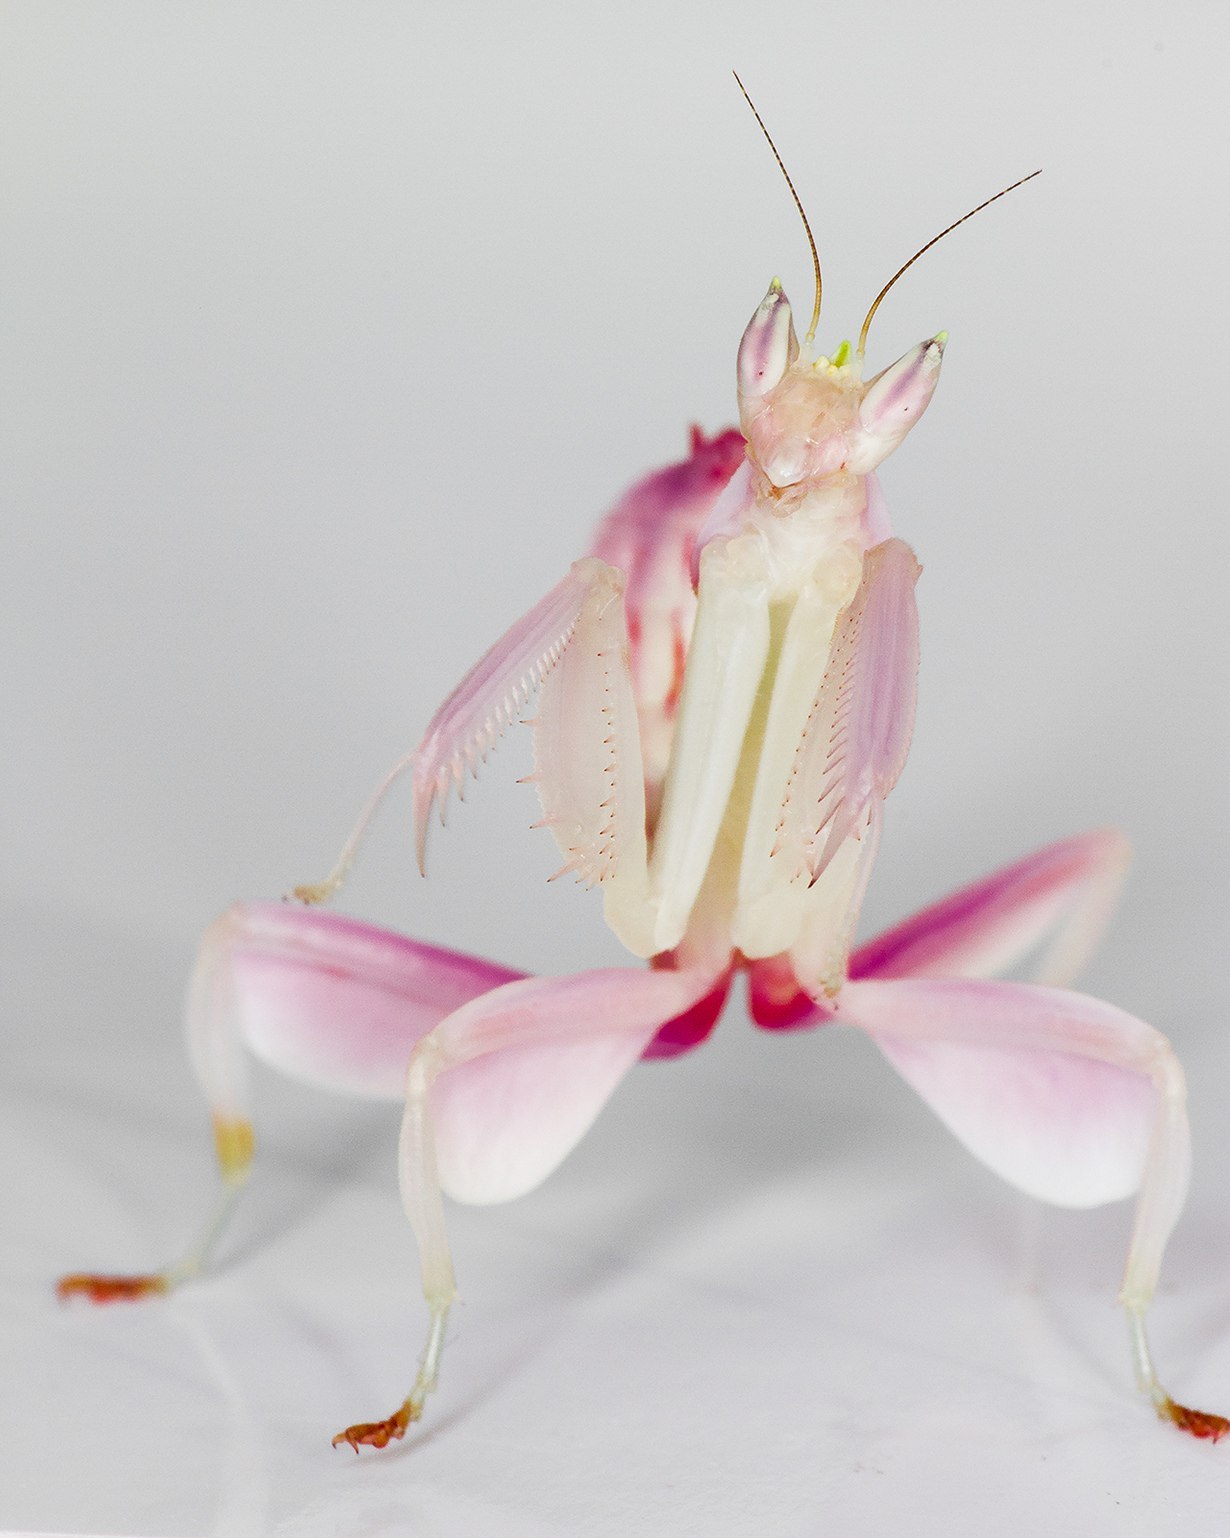 Orchid mantis σε όλη του τη δόξα